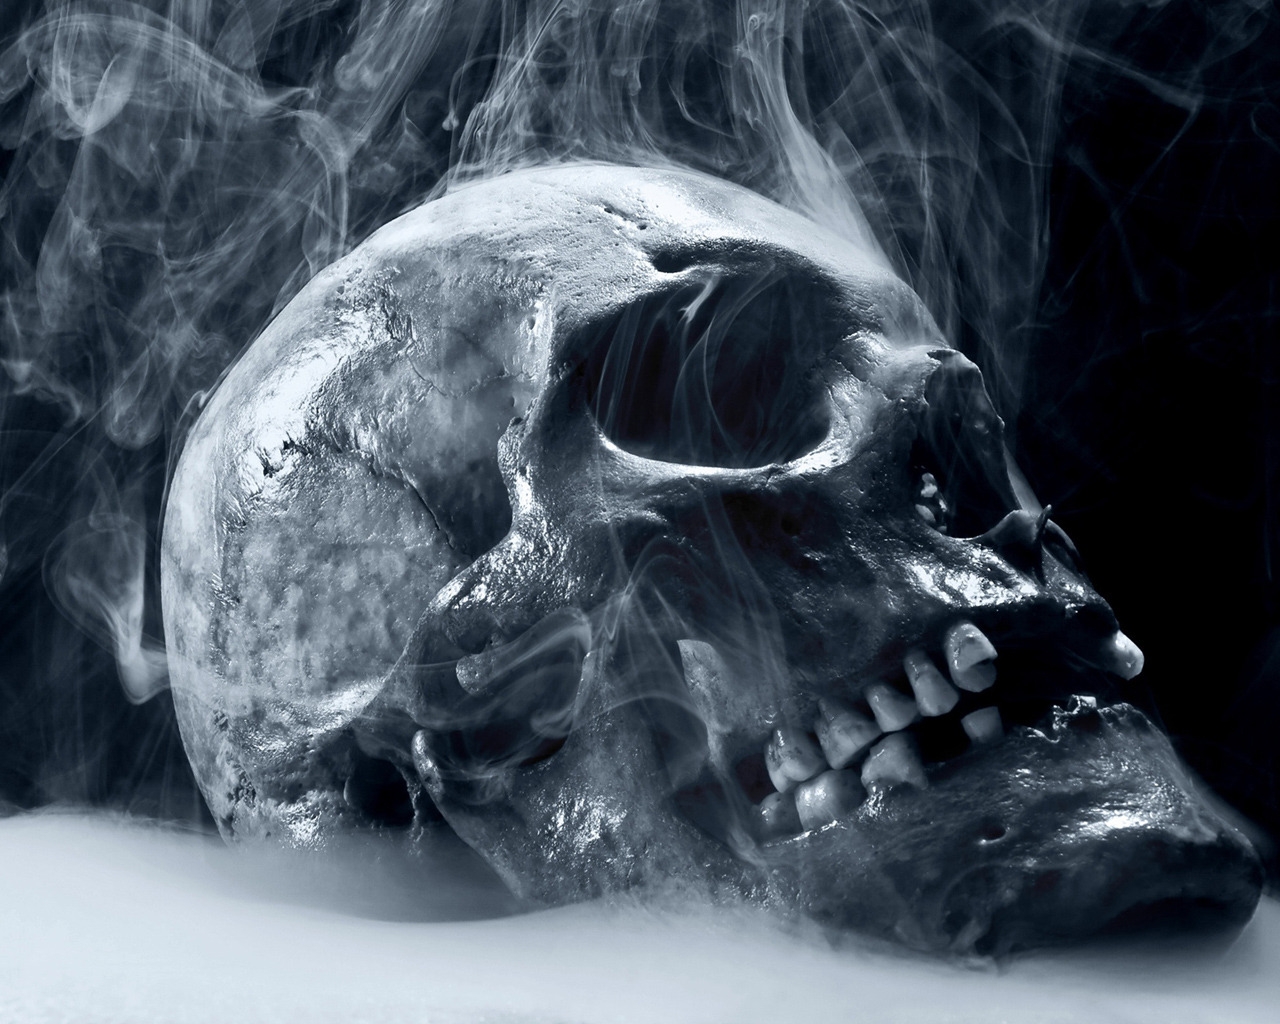 Skull Smoking for 1280 x 1024 resolution